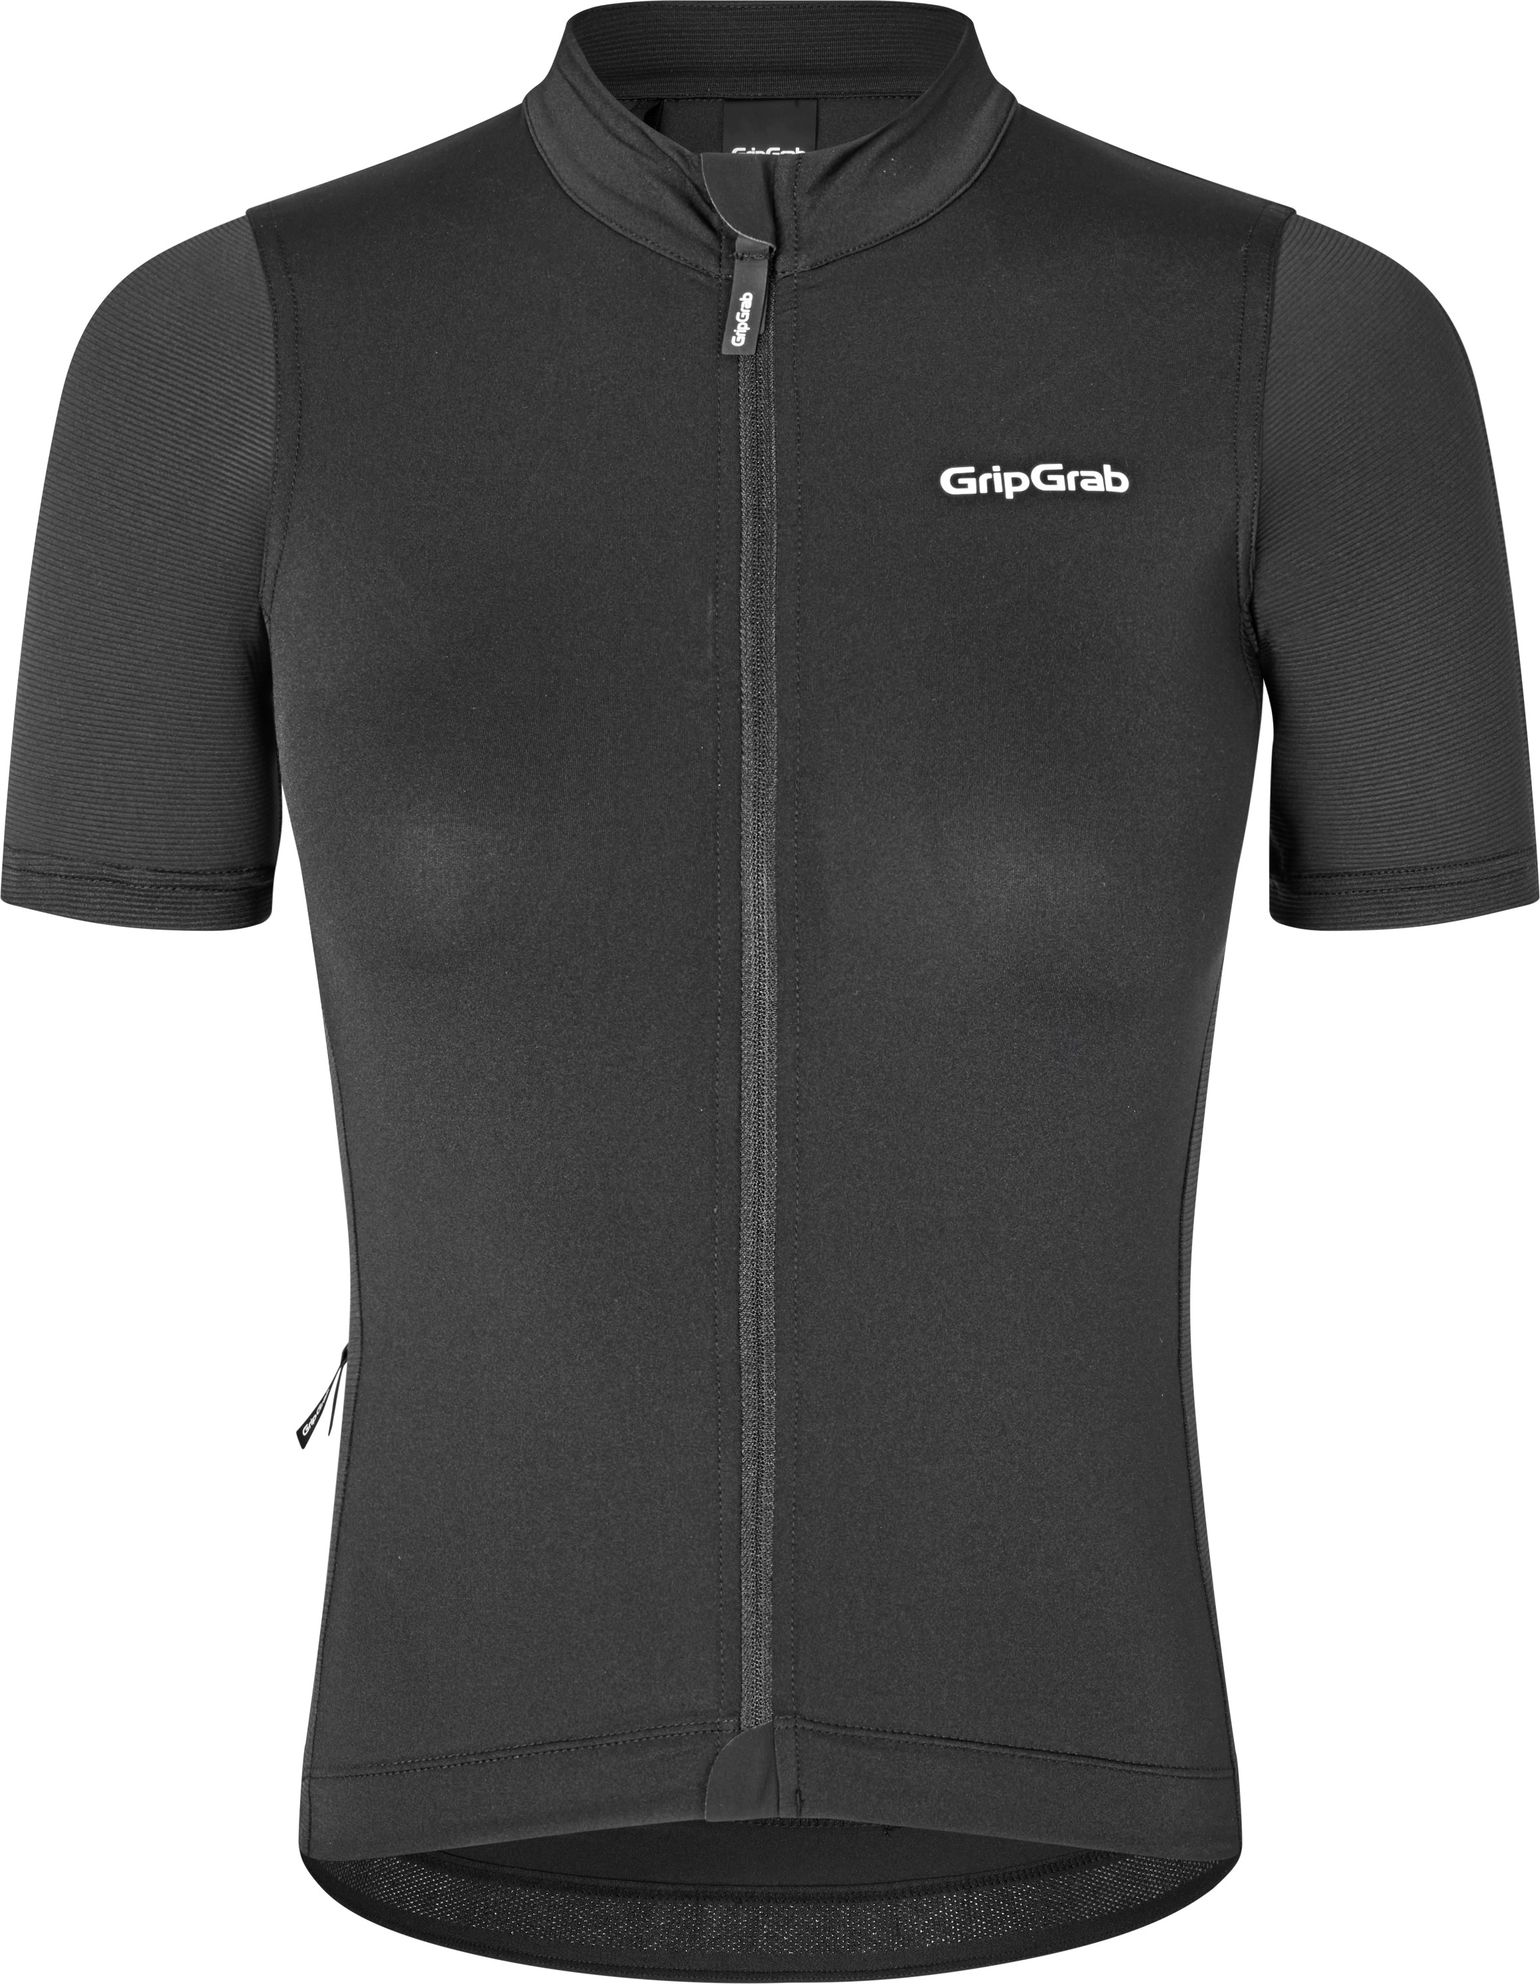 Gripgrab Women's Ride Short Sleeve Jersey Black